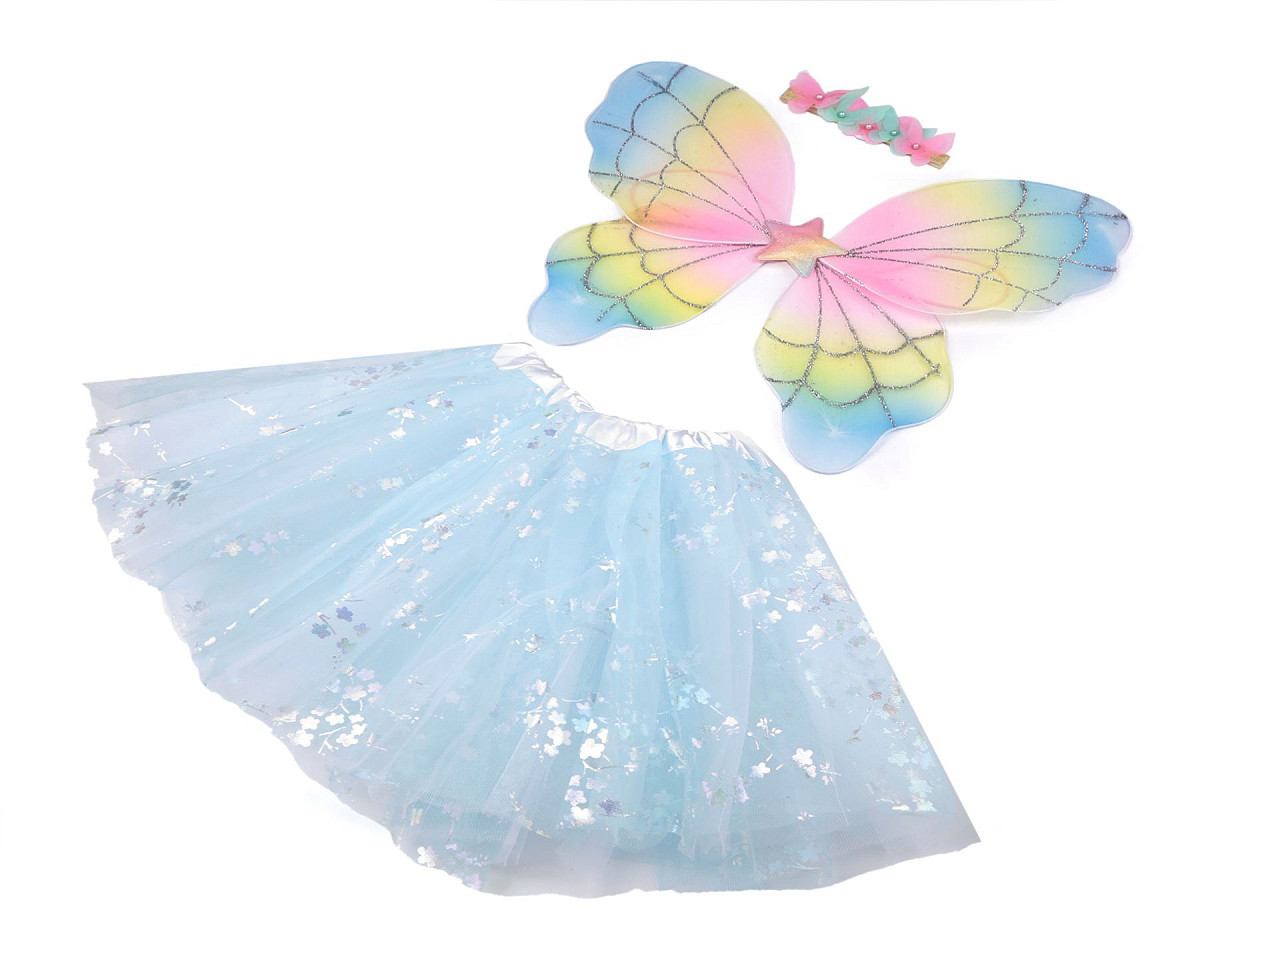 Karnevalový kostým - motýl, barva 1 modrá andělská bílá